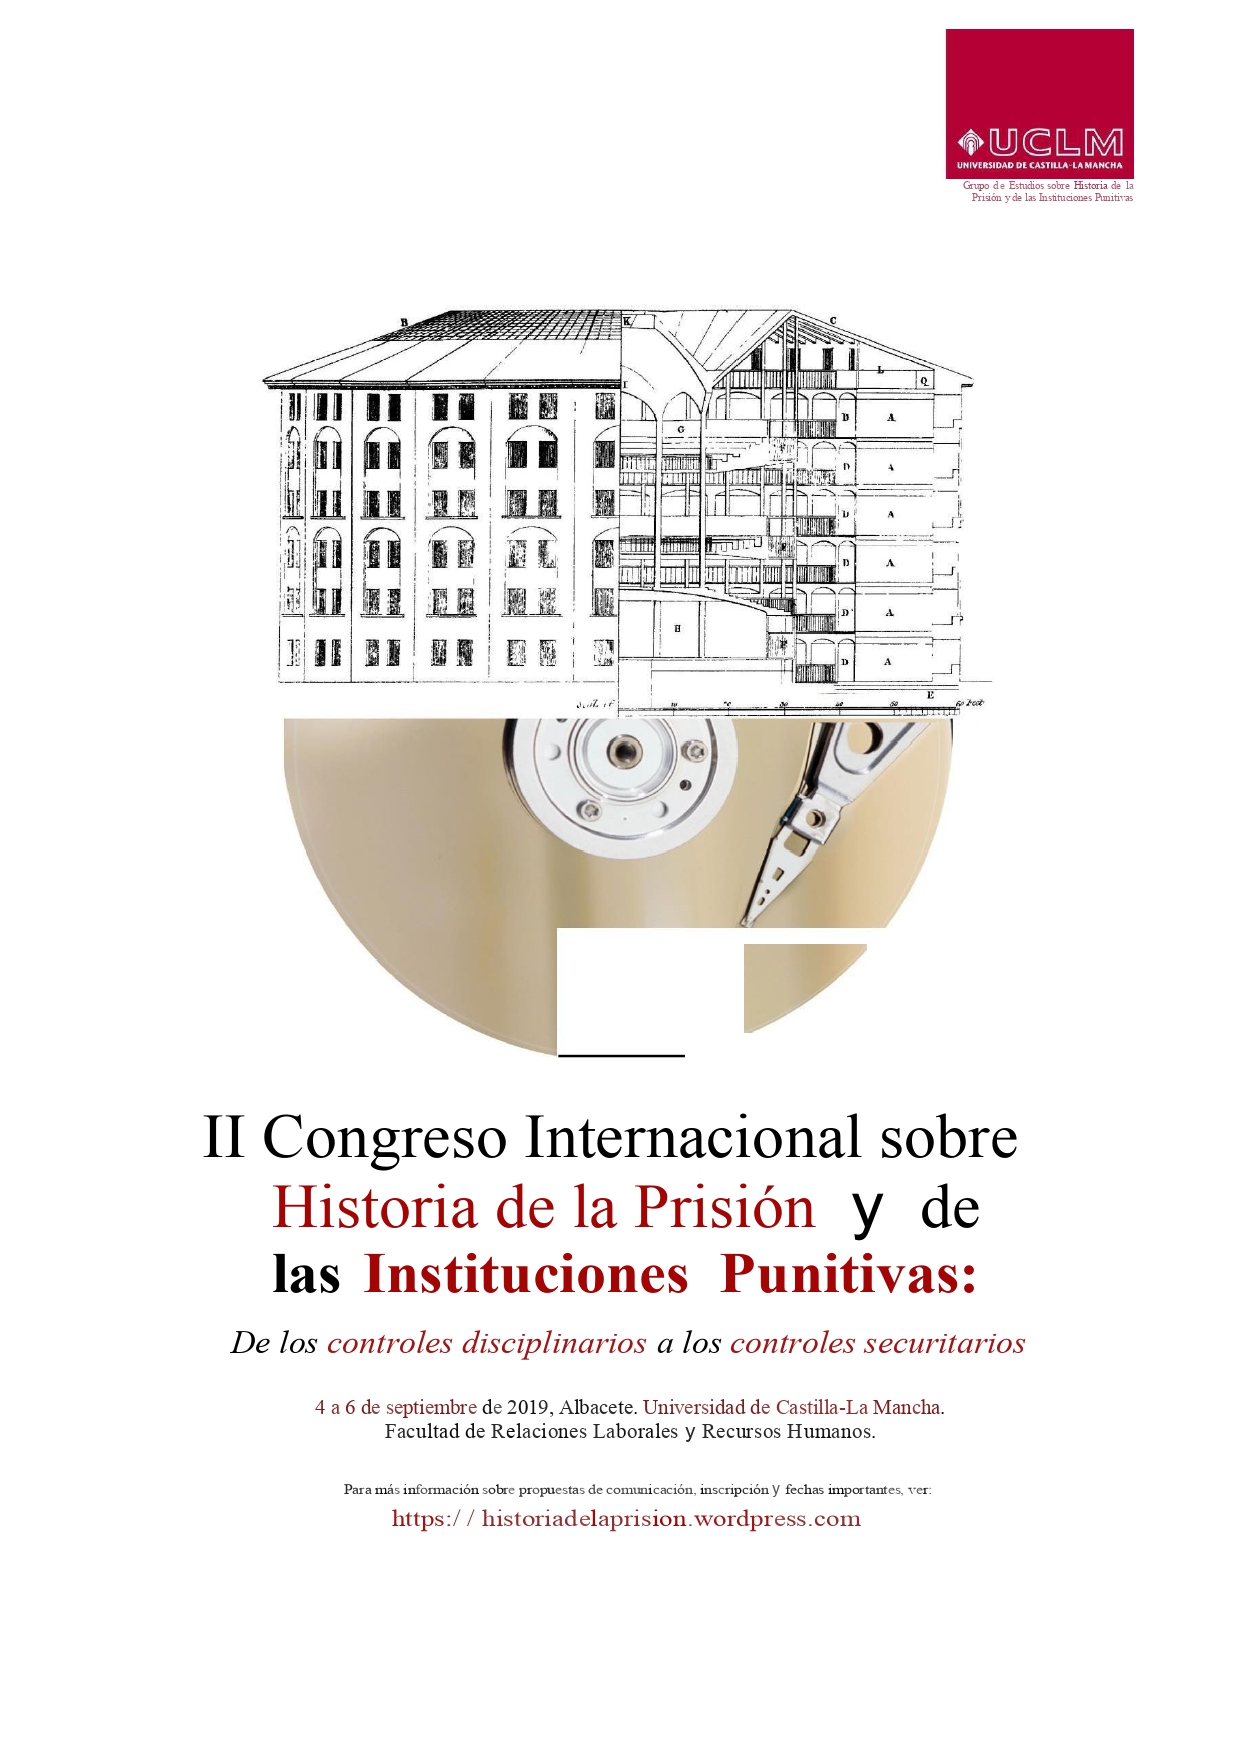 20190906 CongresoItnl Albacete Murs Ainhoa Alejandro